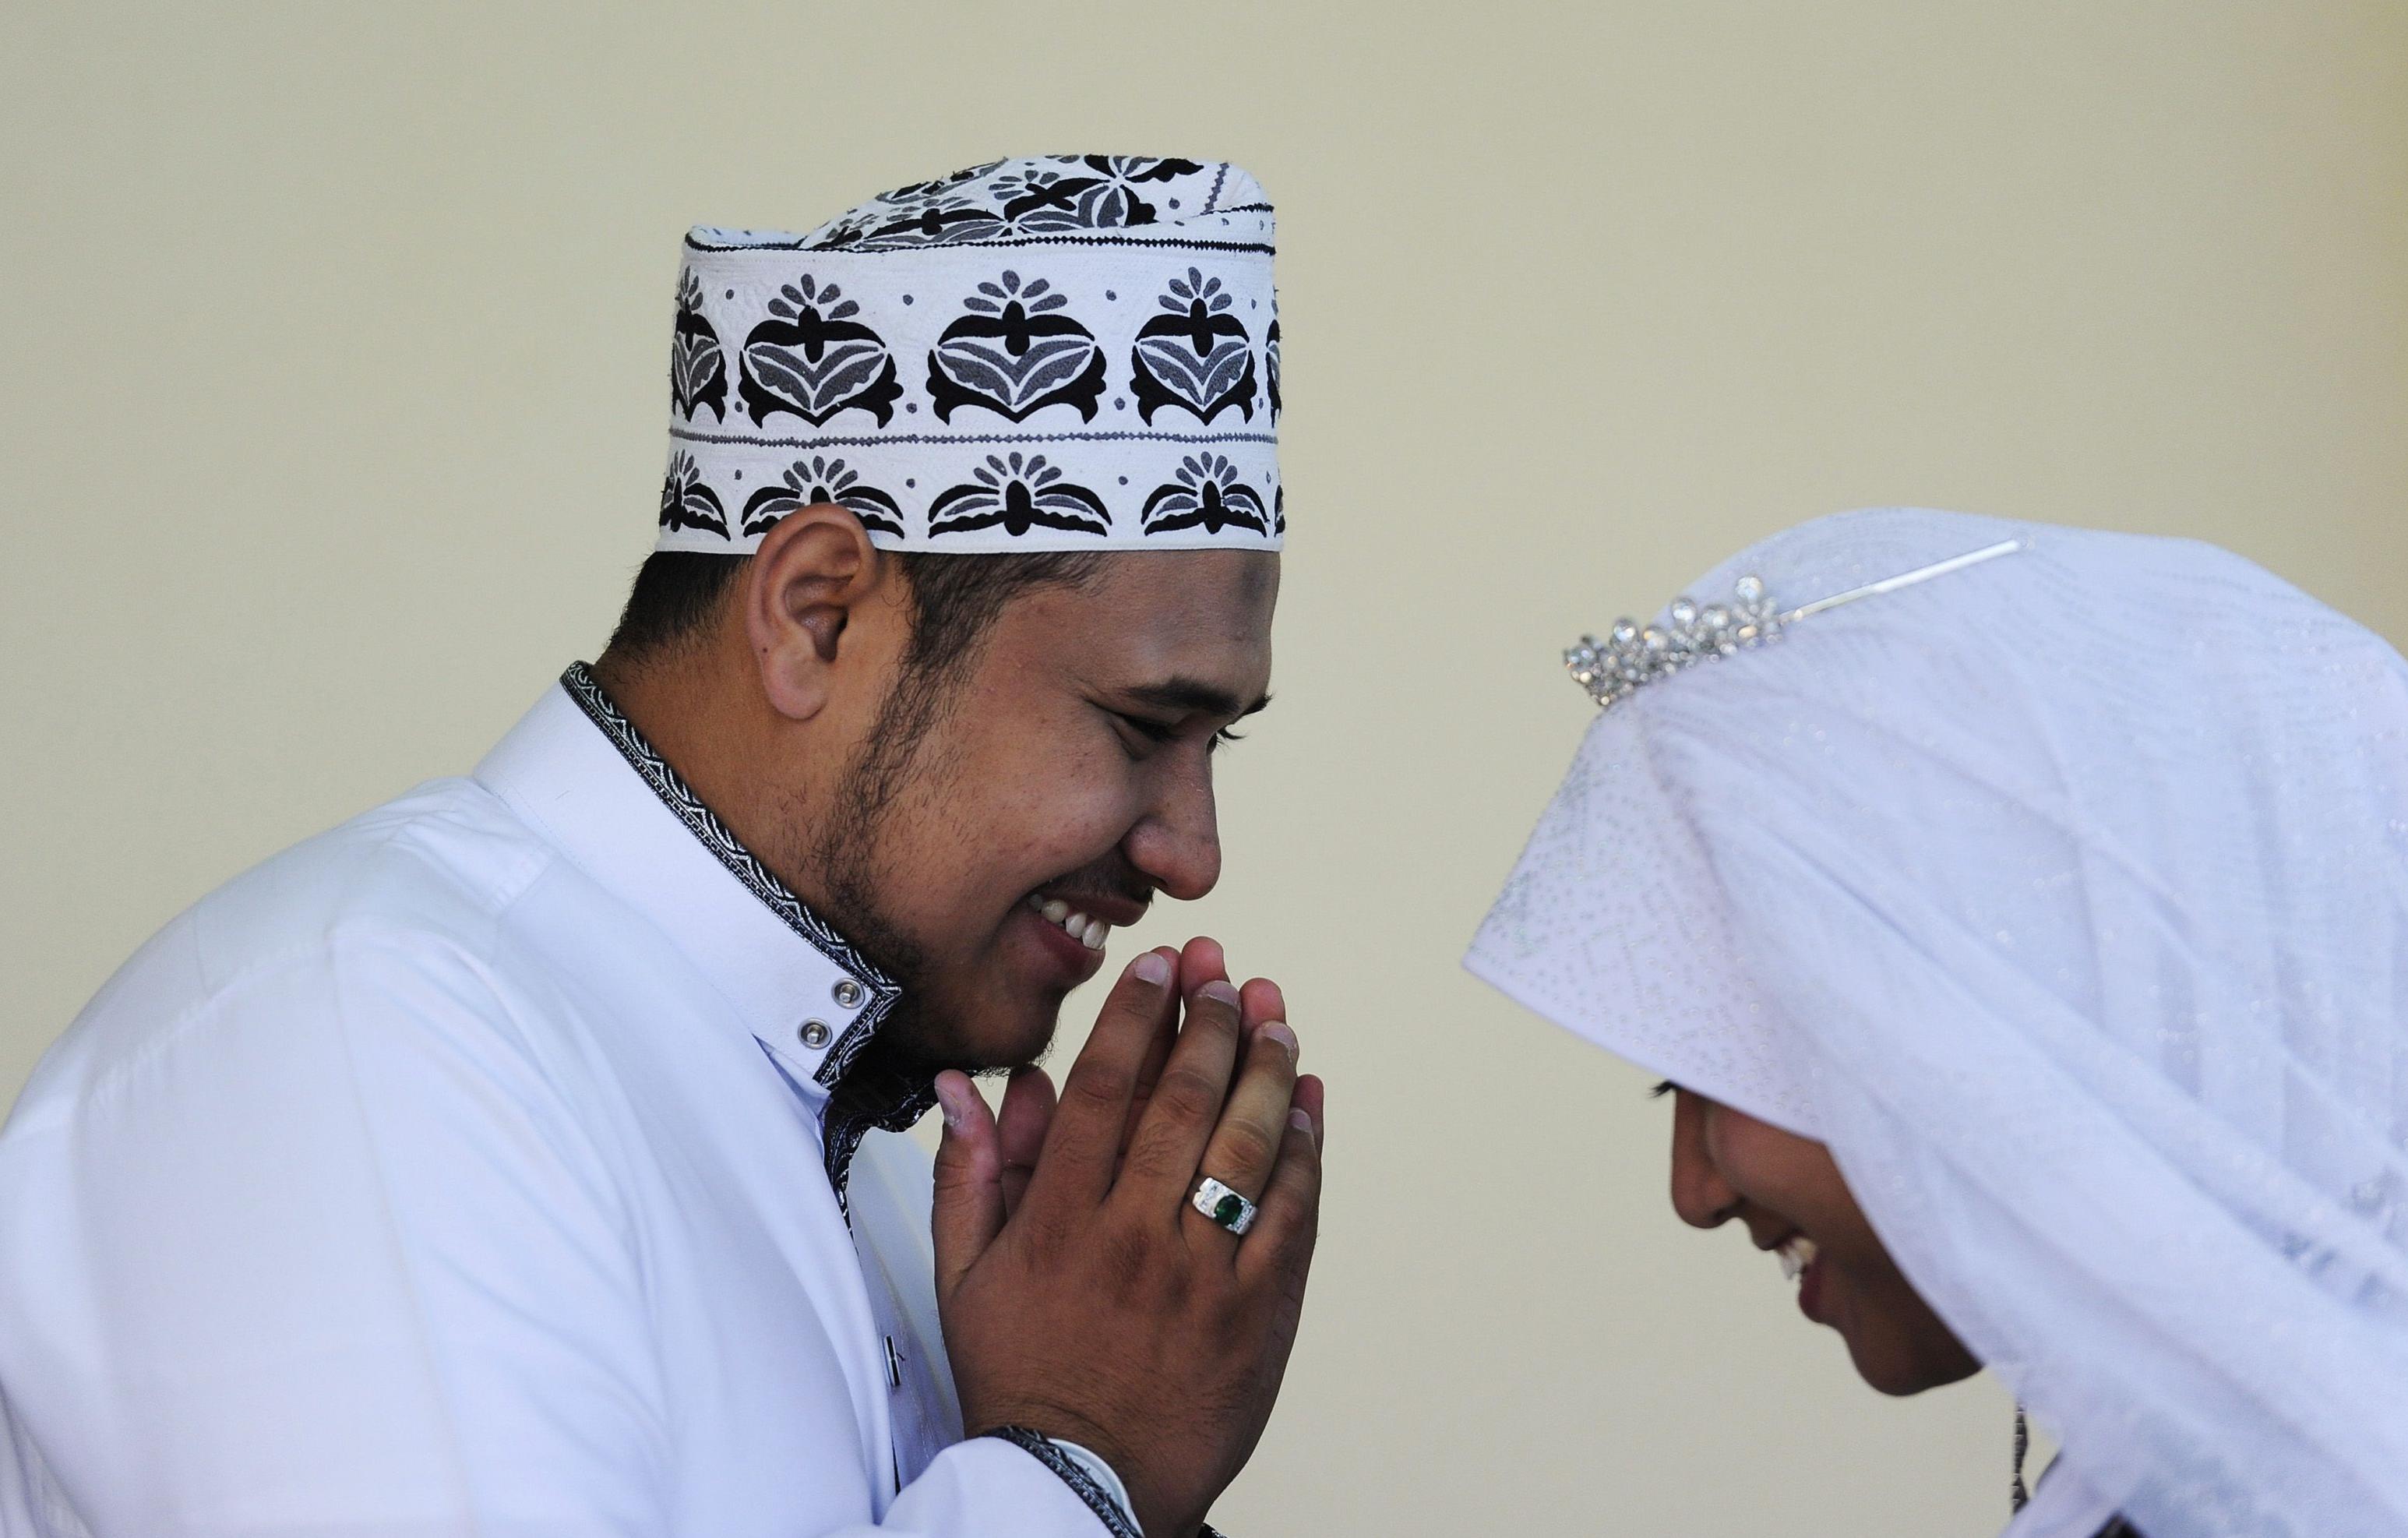 Muslim wife. Мусульманин. Брак с мусульманином. Мужчина и женщина в Исламе. Фото мусульман.